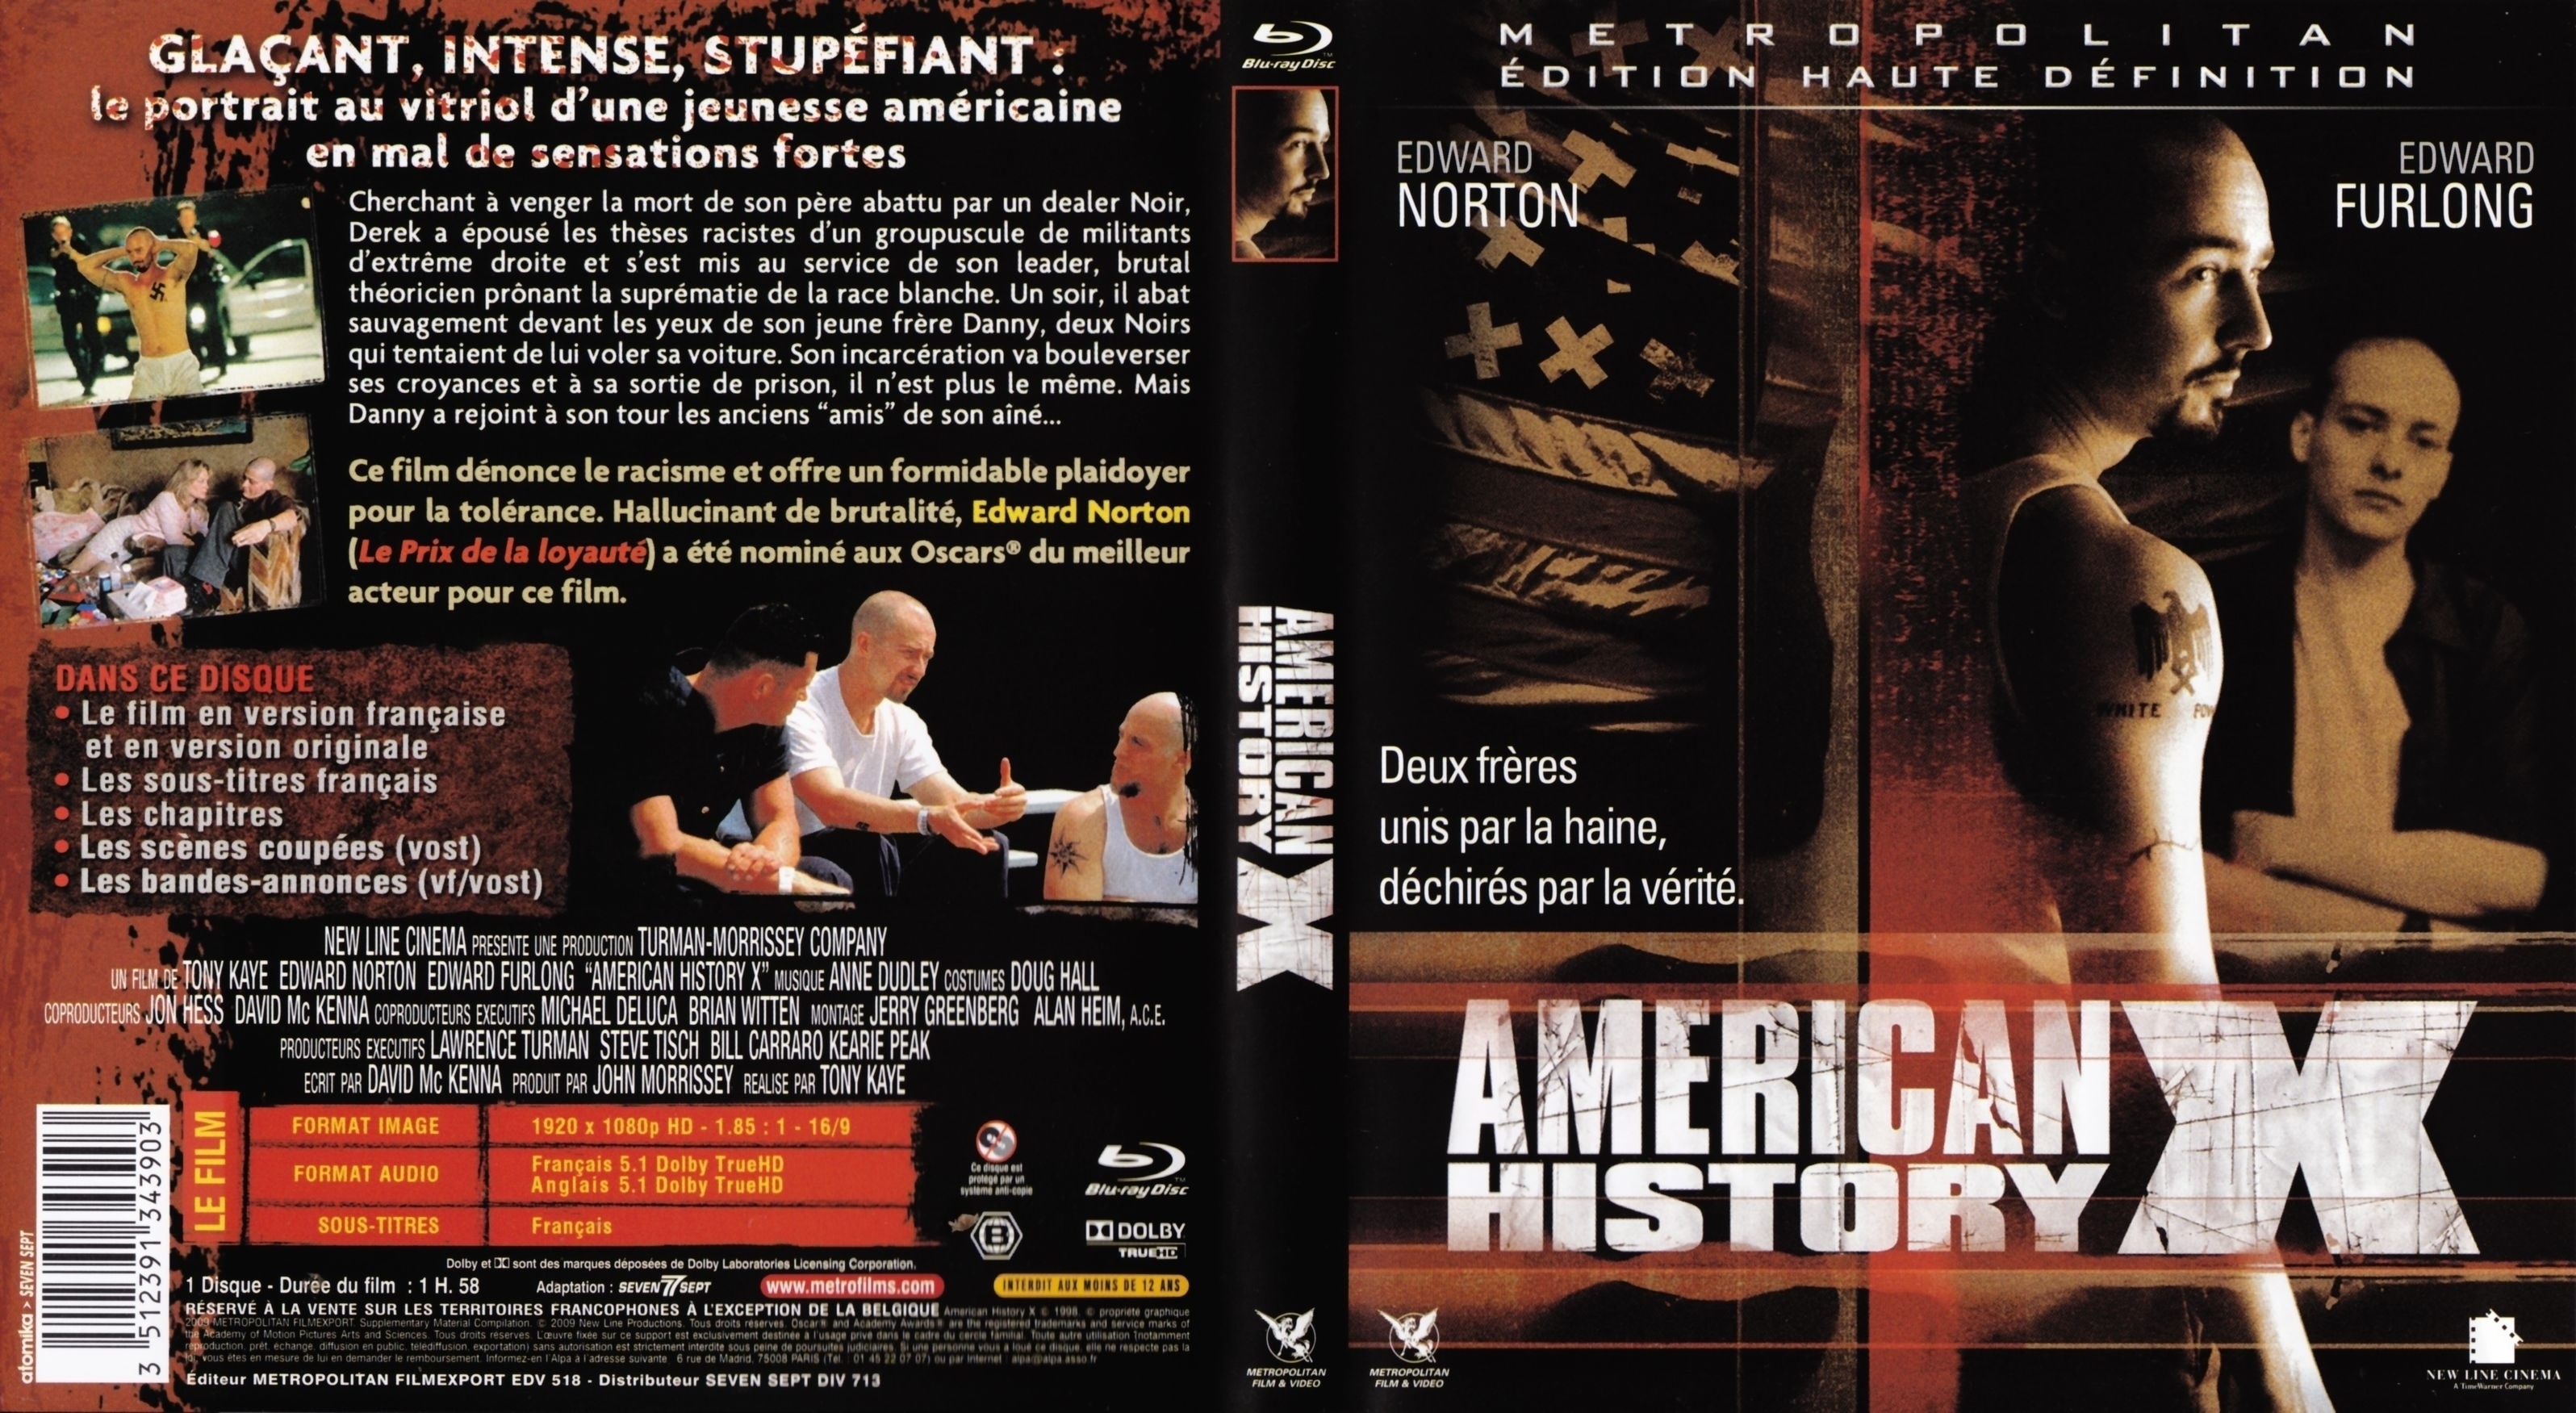 Jaquette DVD American history X (BLU-RAY) v2